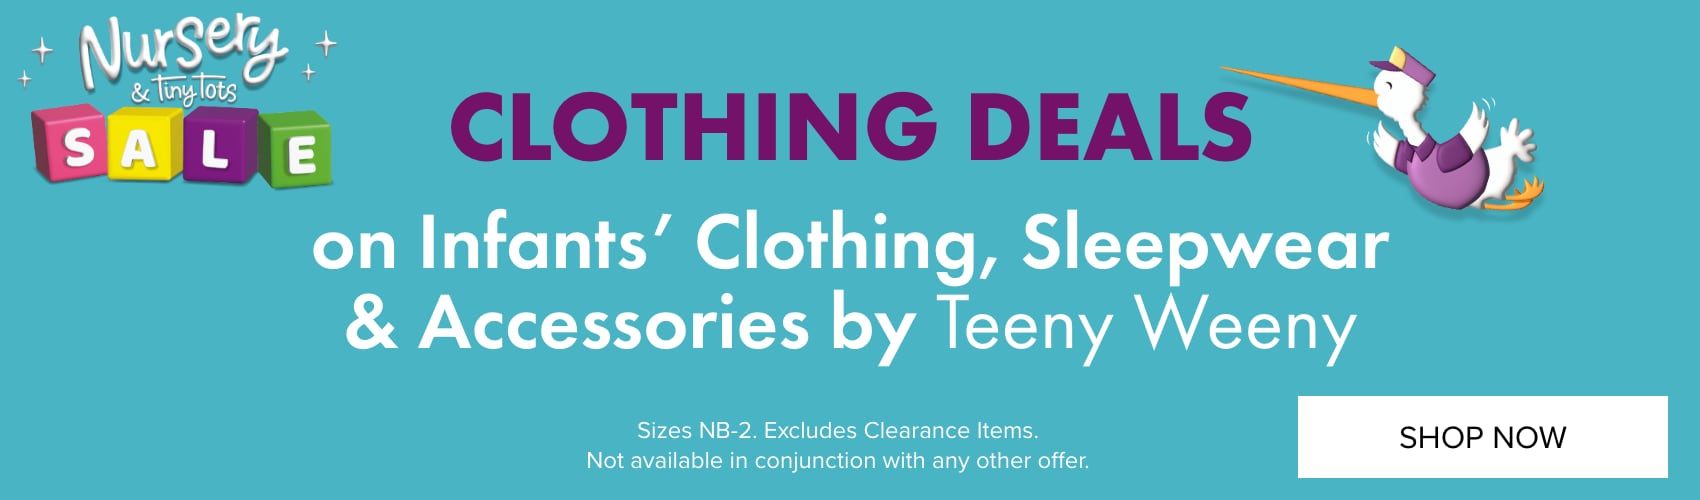 Infants' Clothing, Sleepwear & Accessories by Teeny Weeny